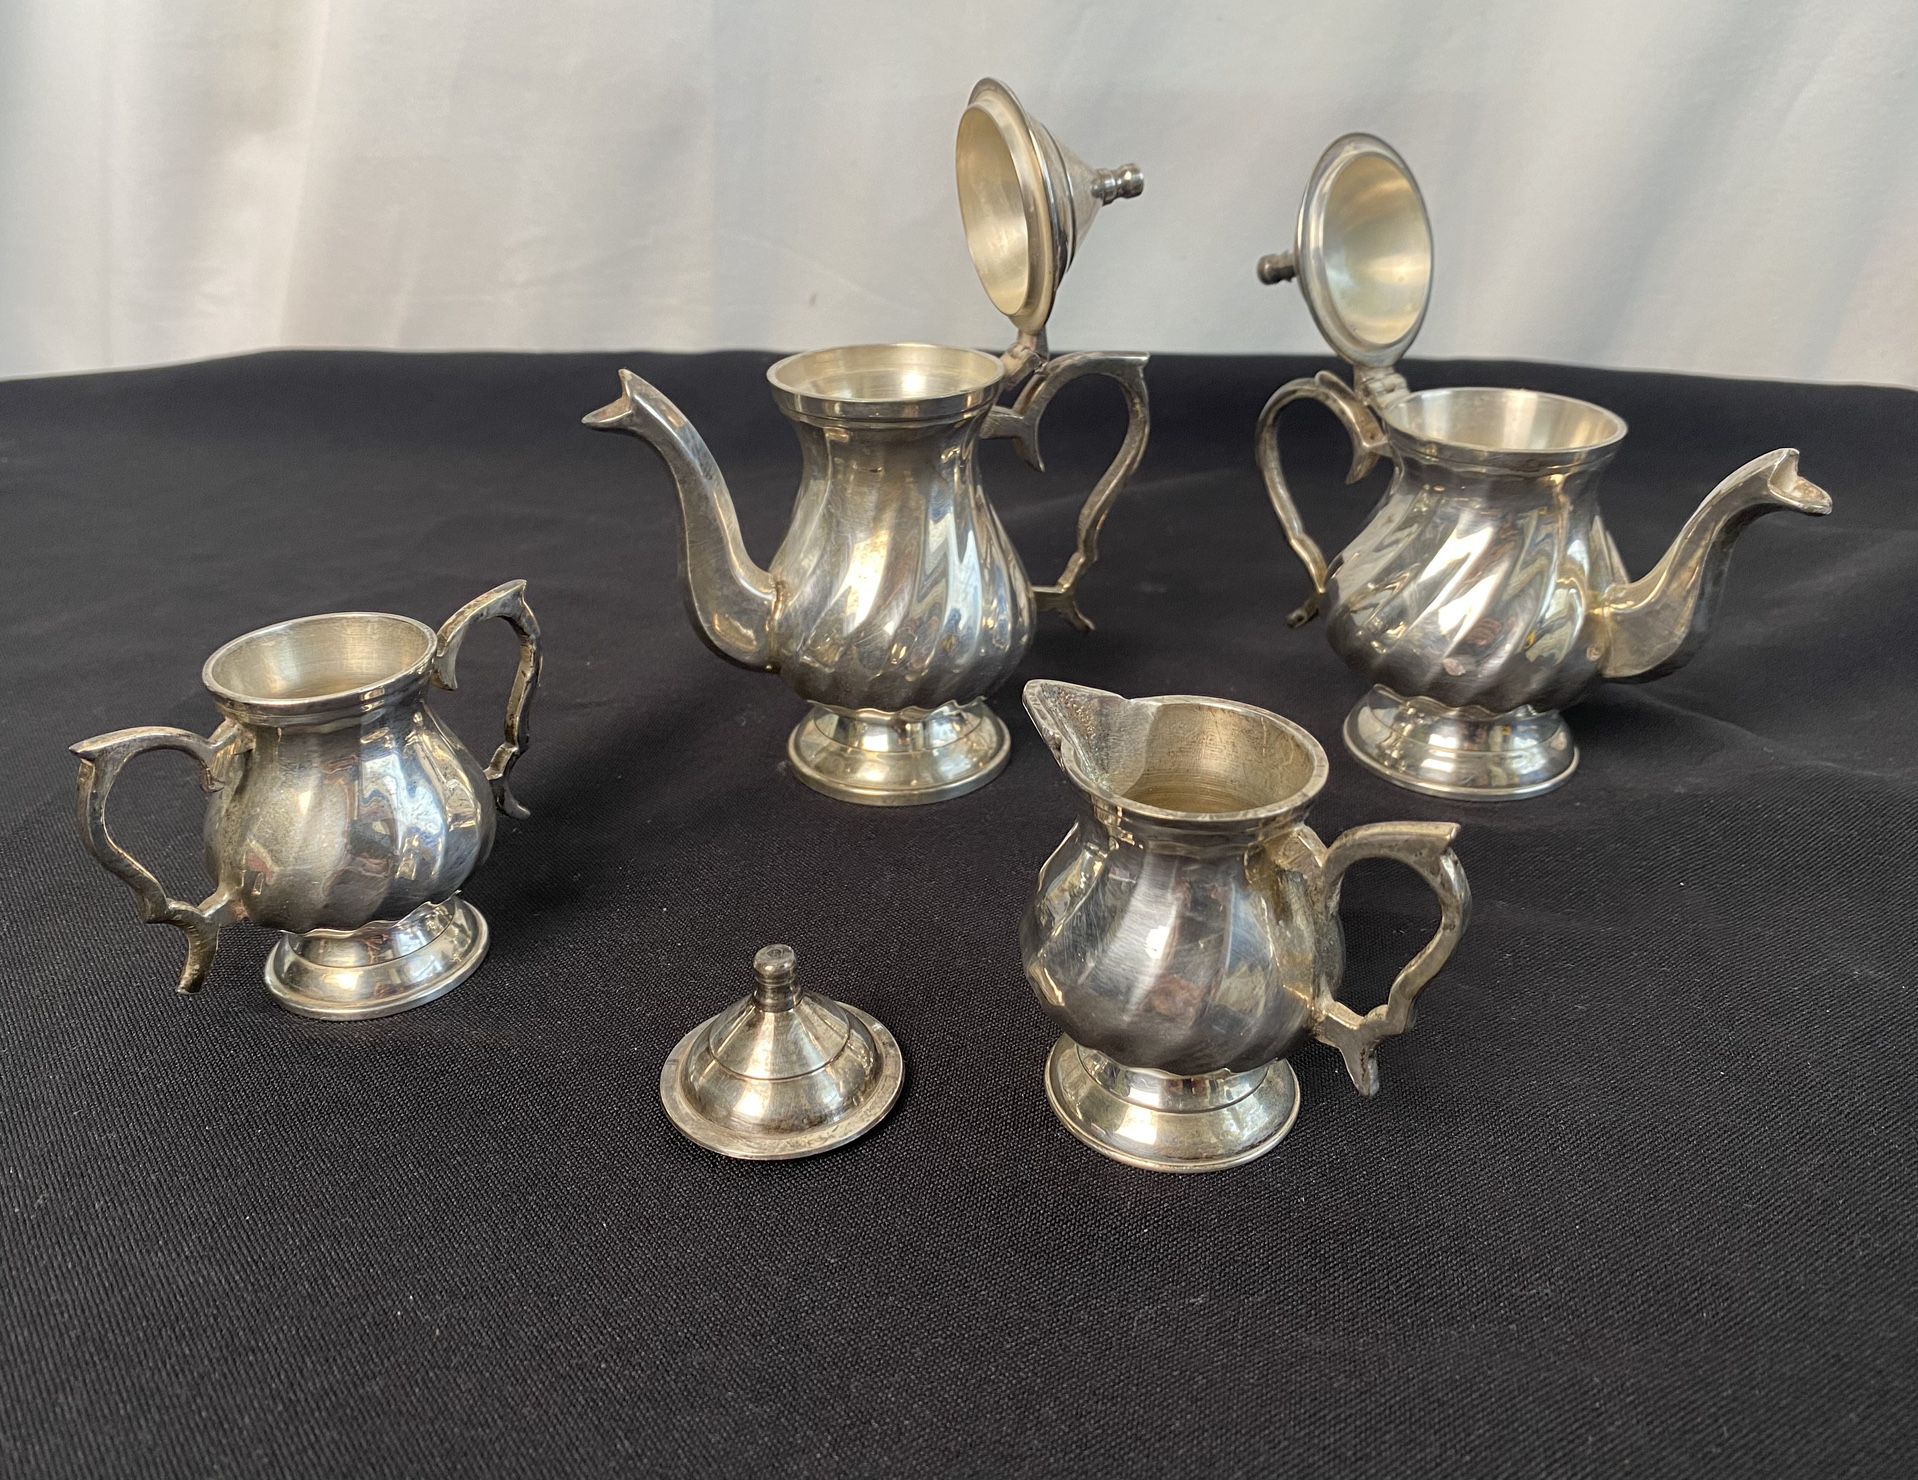 Vintage Silver Plated 5 Piece Mini Tea Set India Tea Pot Creamer Sugar Pitcher  (antique collectors items)